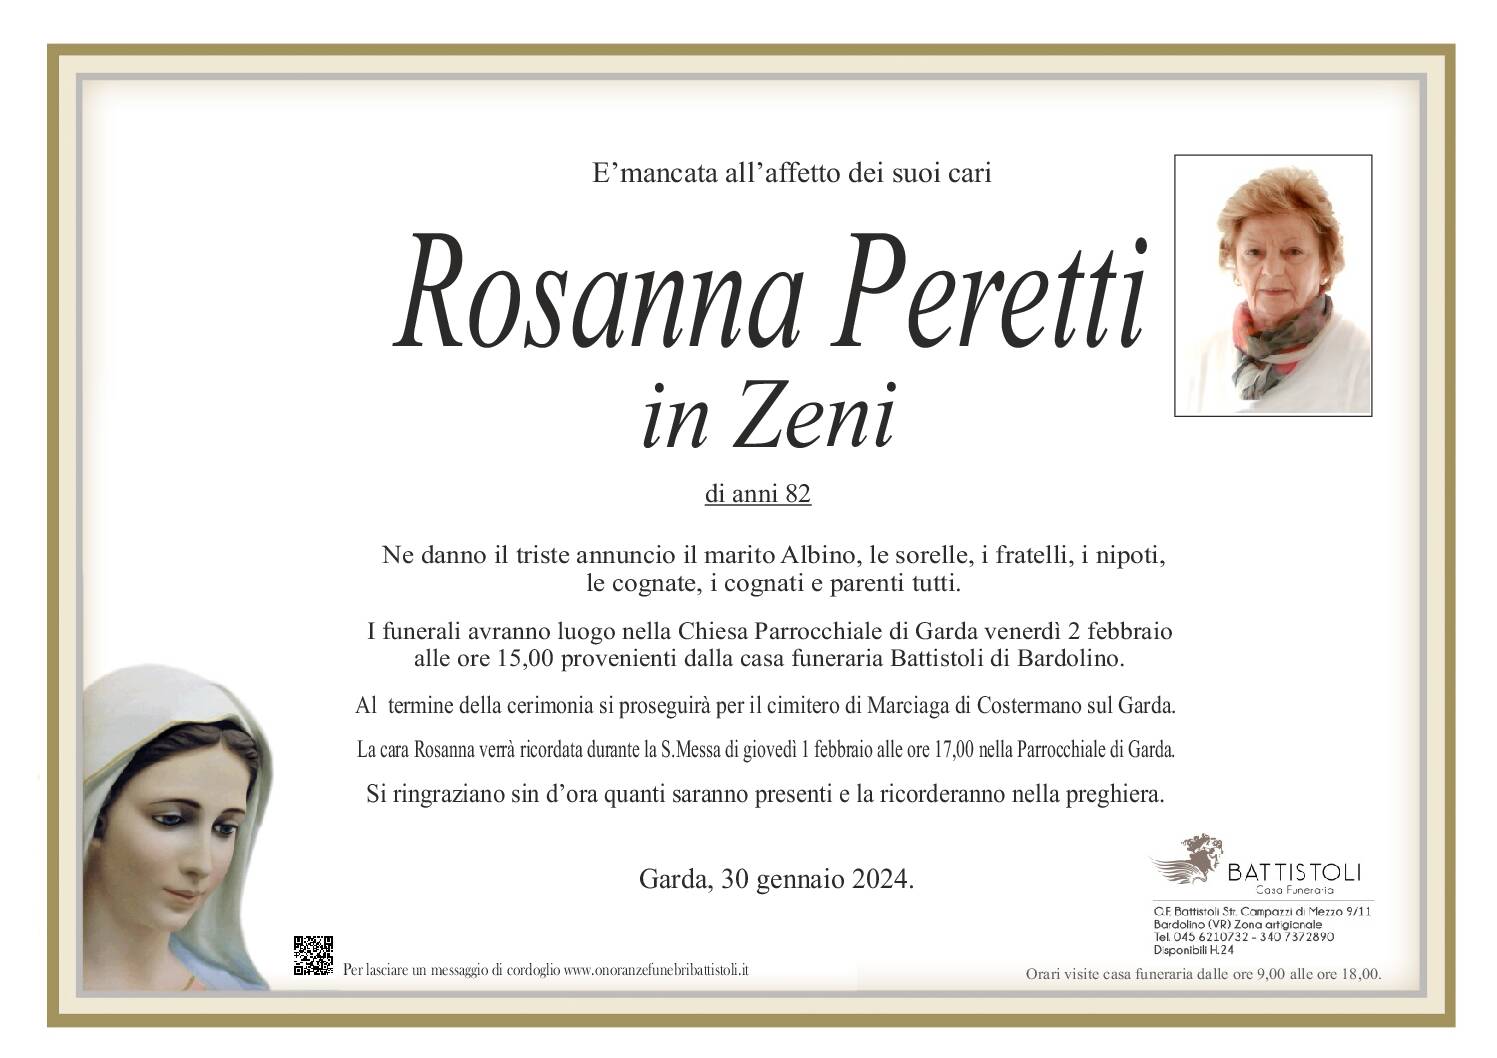 Peretti Rosanna